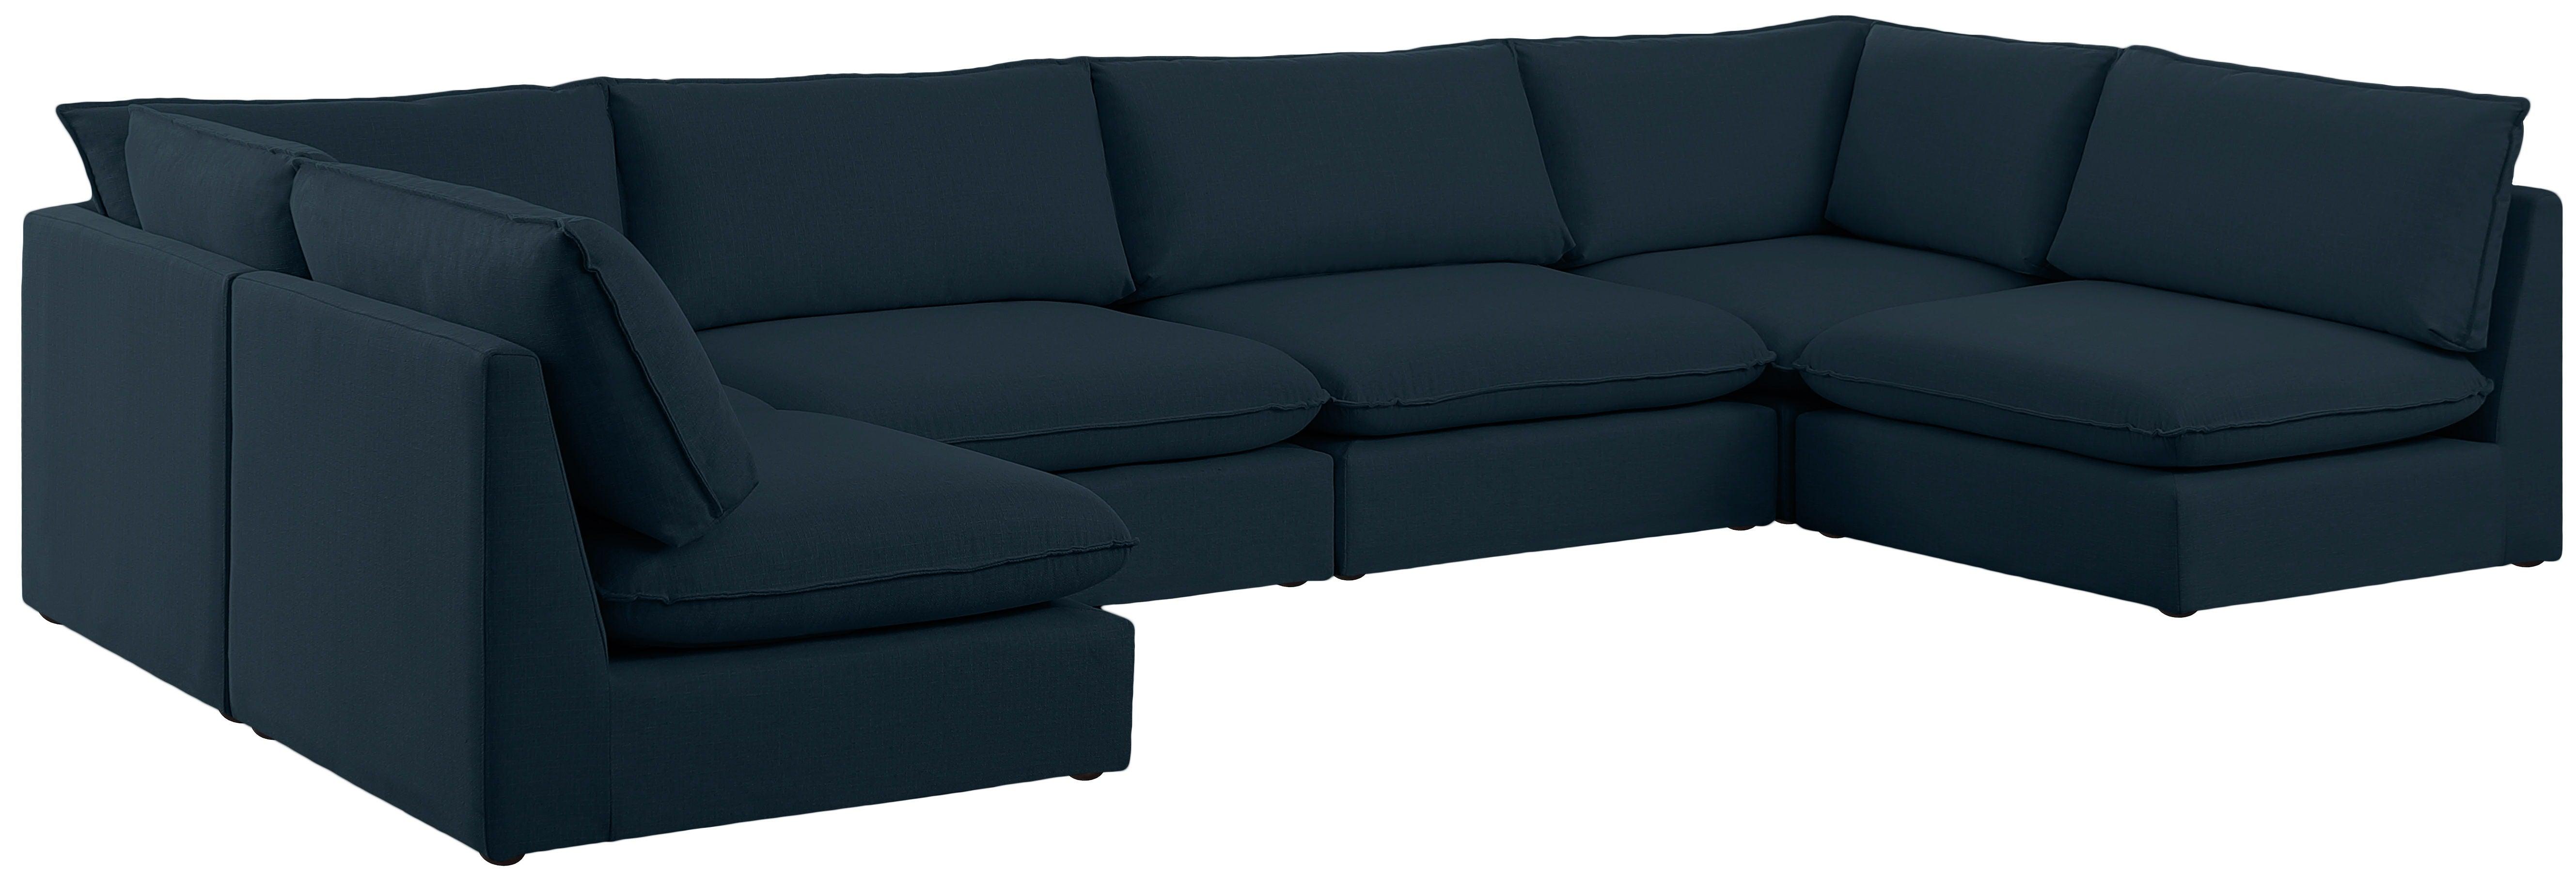 Meridian Furniture - Mackenzie - Modular Sectional 6 Piece - Navy - Modern & Contemporary - 5th Avenue Furniture